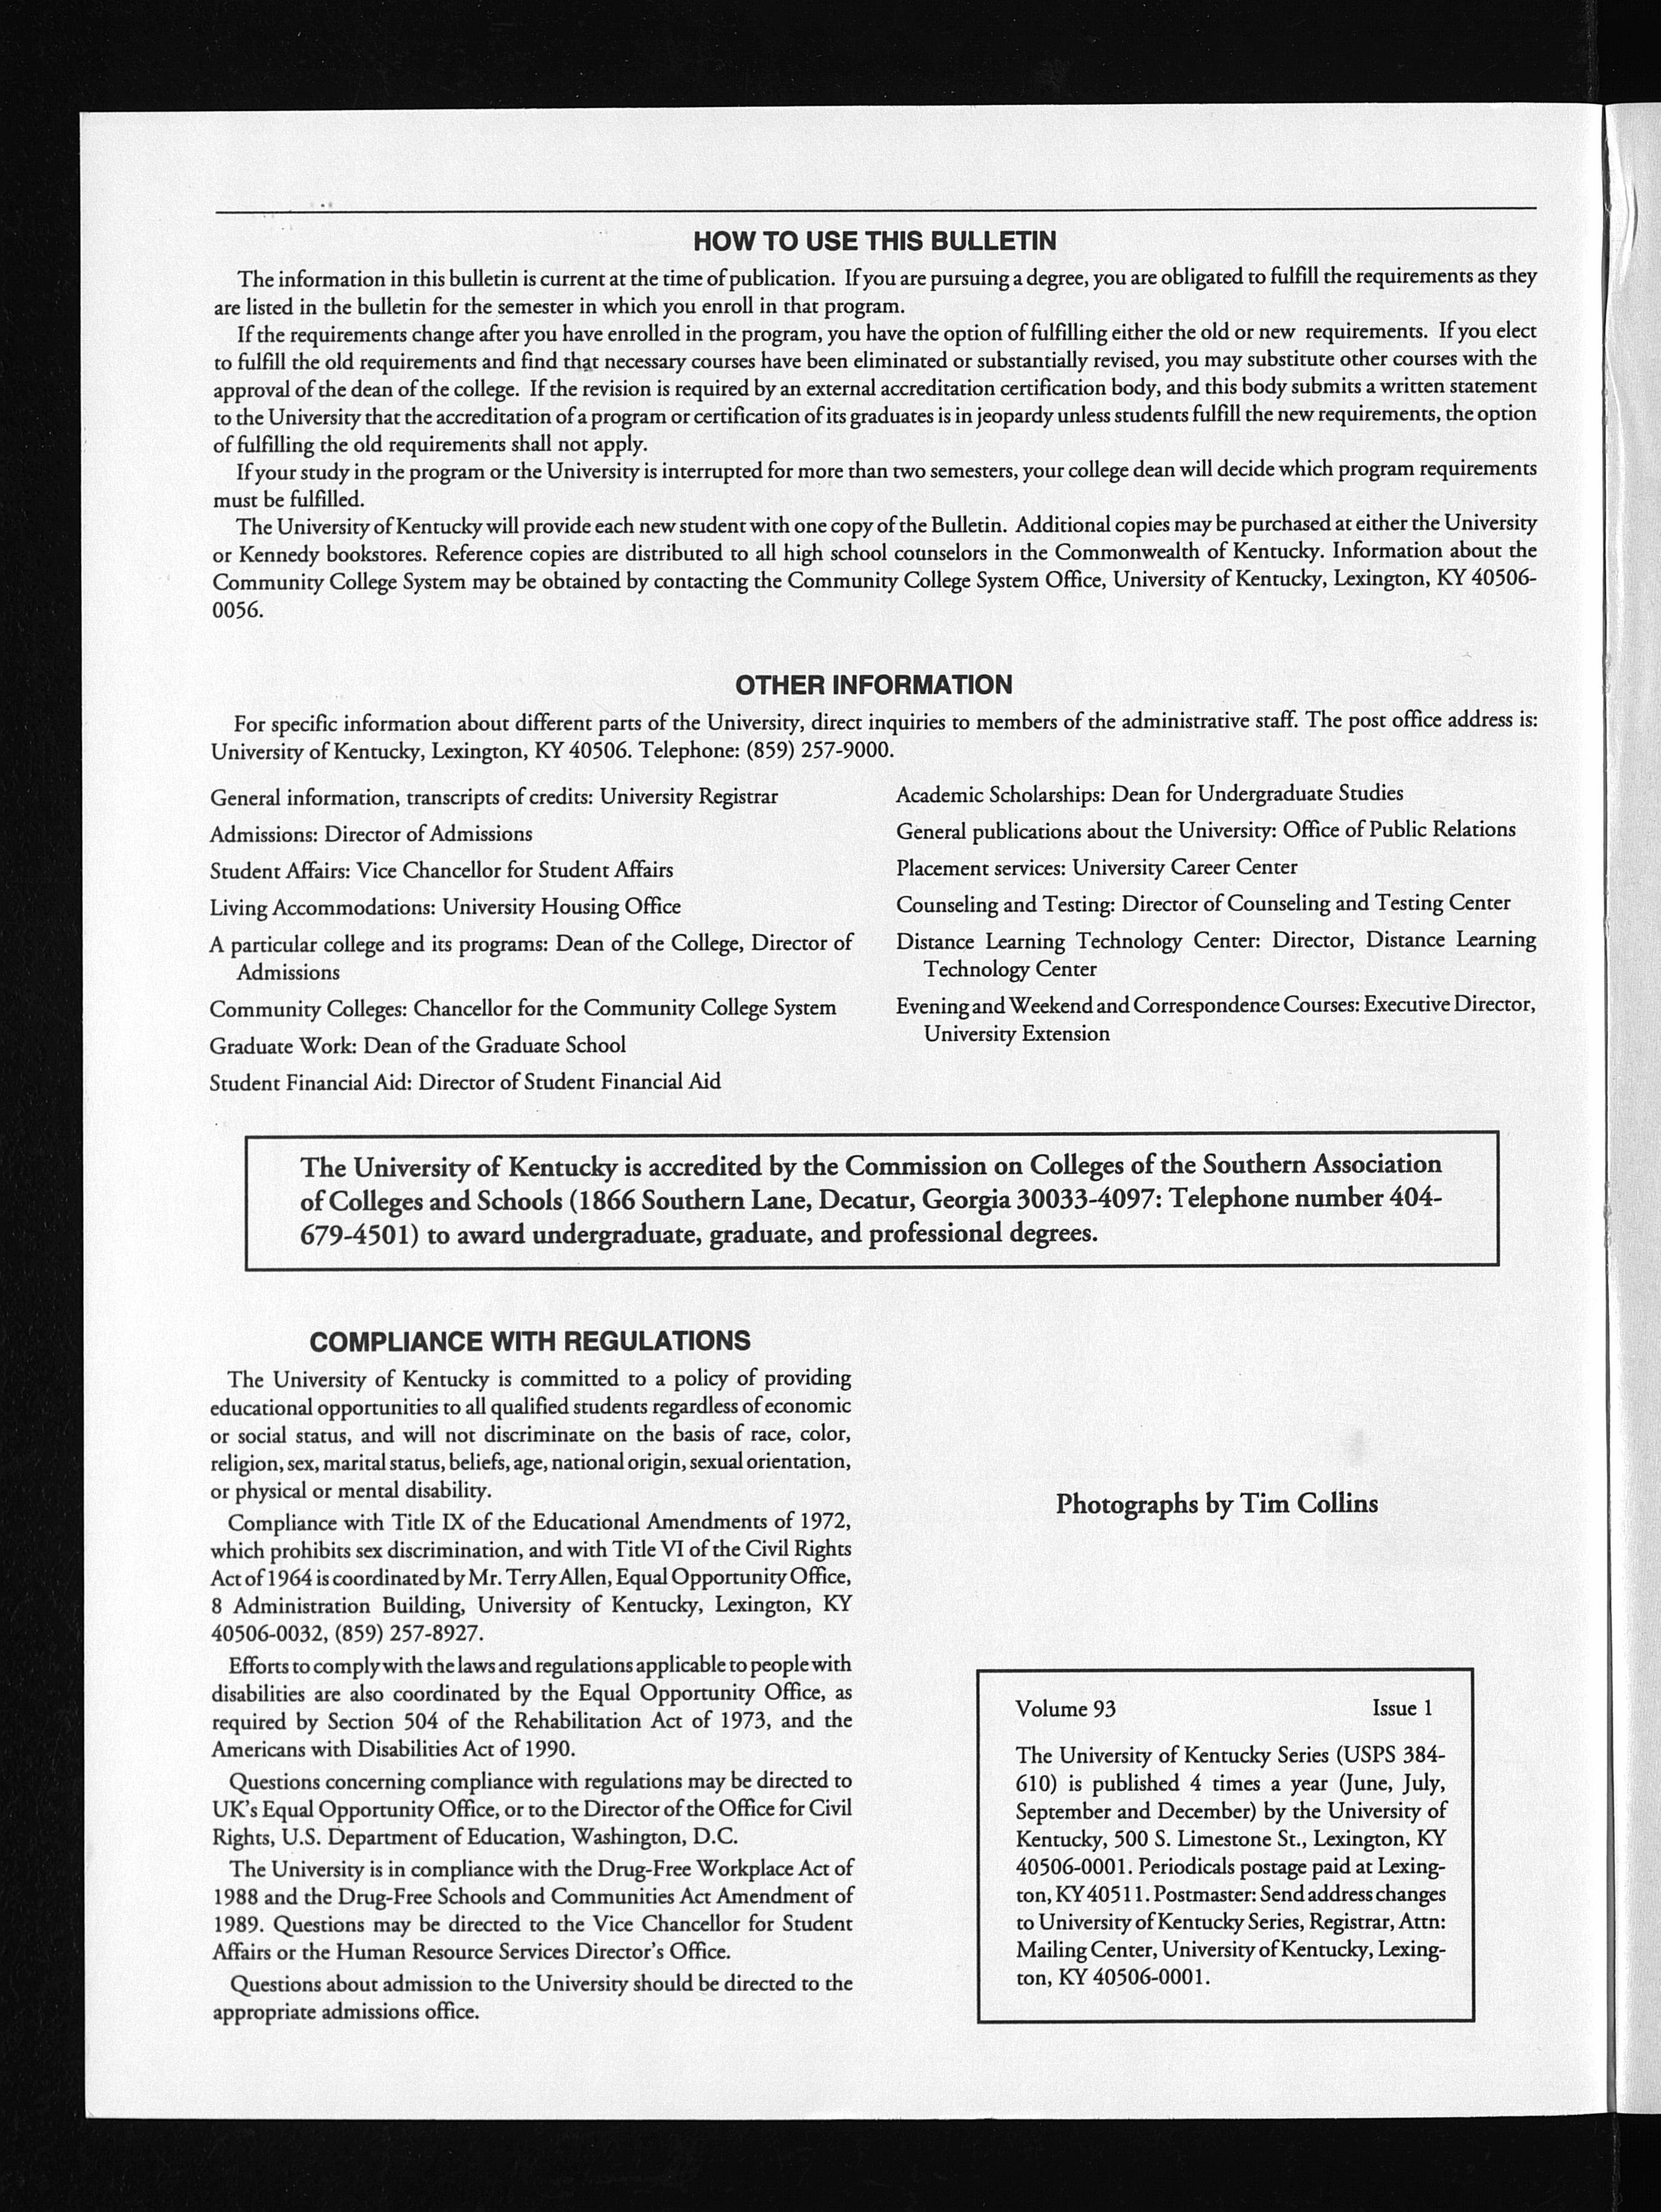 University of Kentucky Series- University Bulletin, Volume 93, Issue 1, 2001-2002 picture